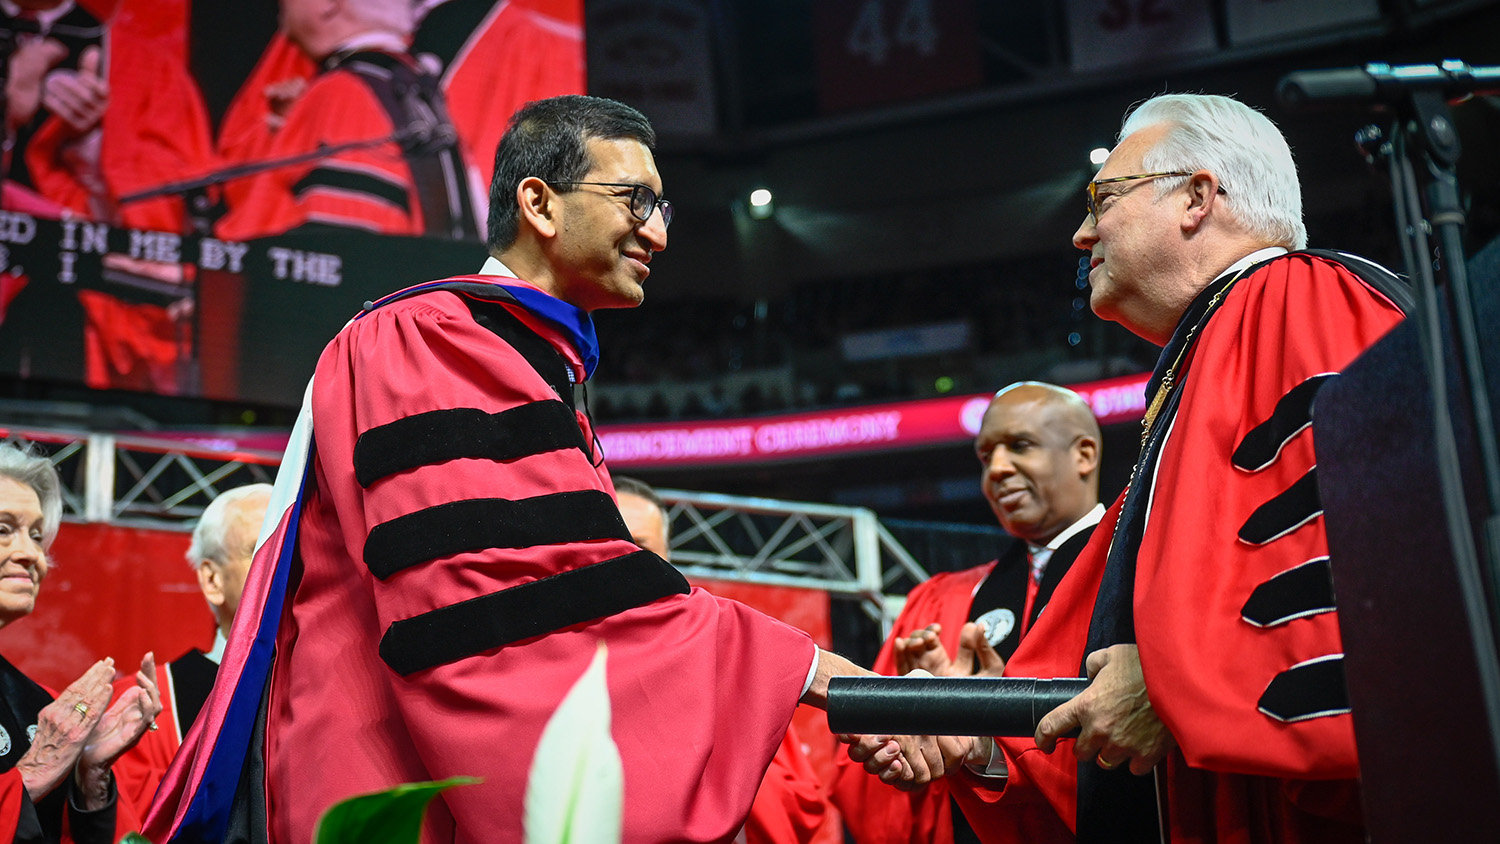 Honorary degree recipient Raj Chetty